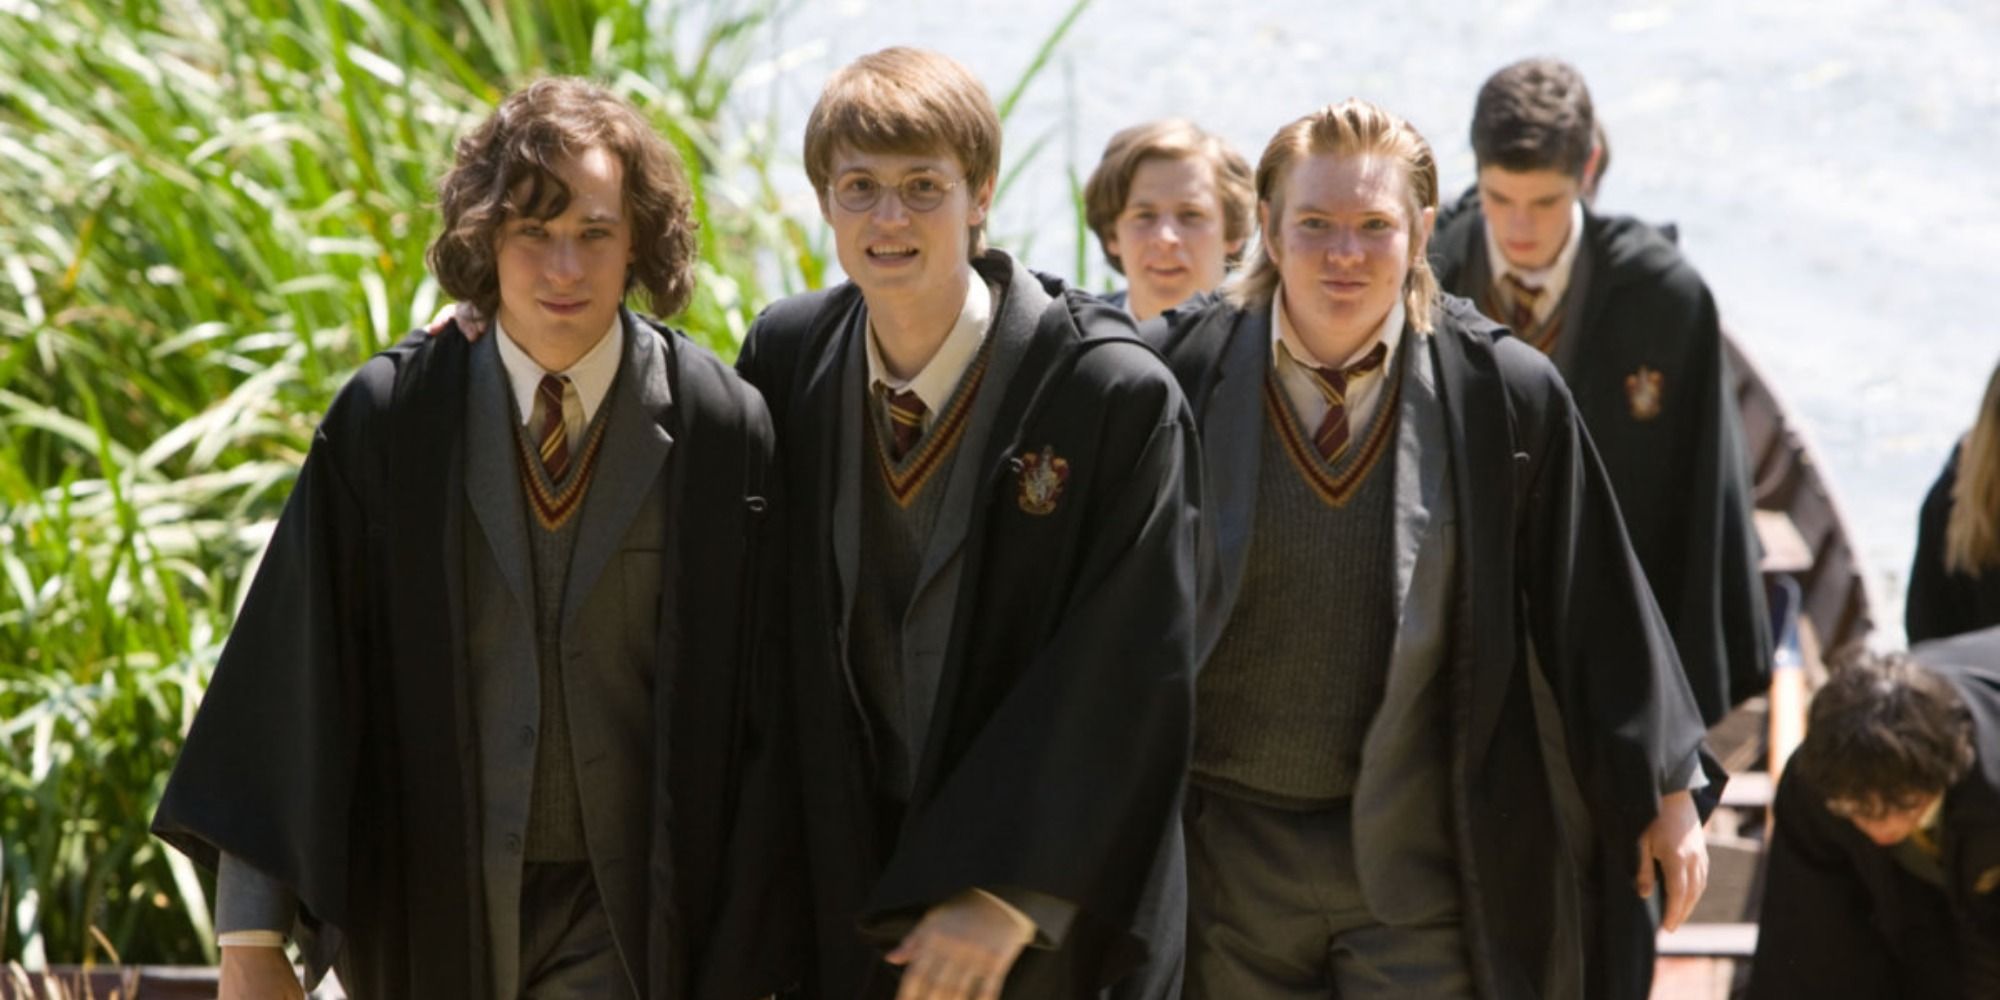 Marauders James Potter, Sirius Black, Peter Pettigrew and Remus Lupin in Harry Potter